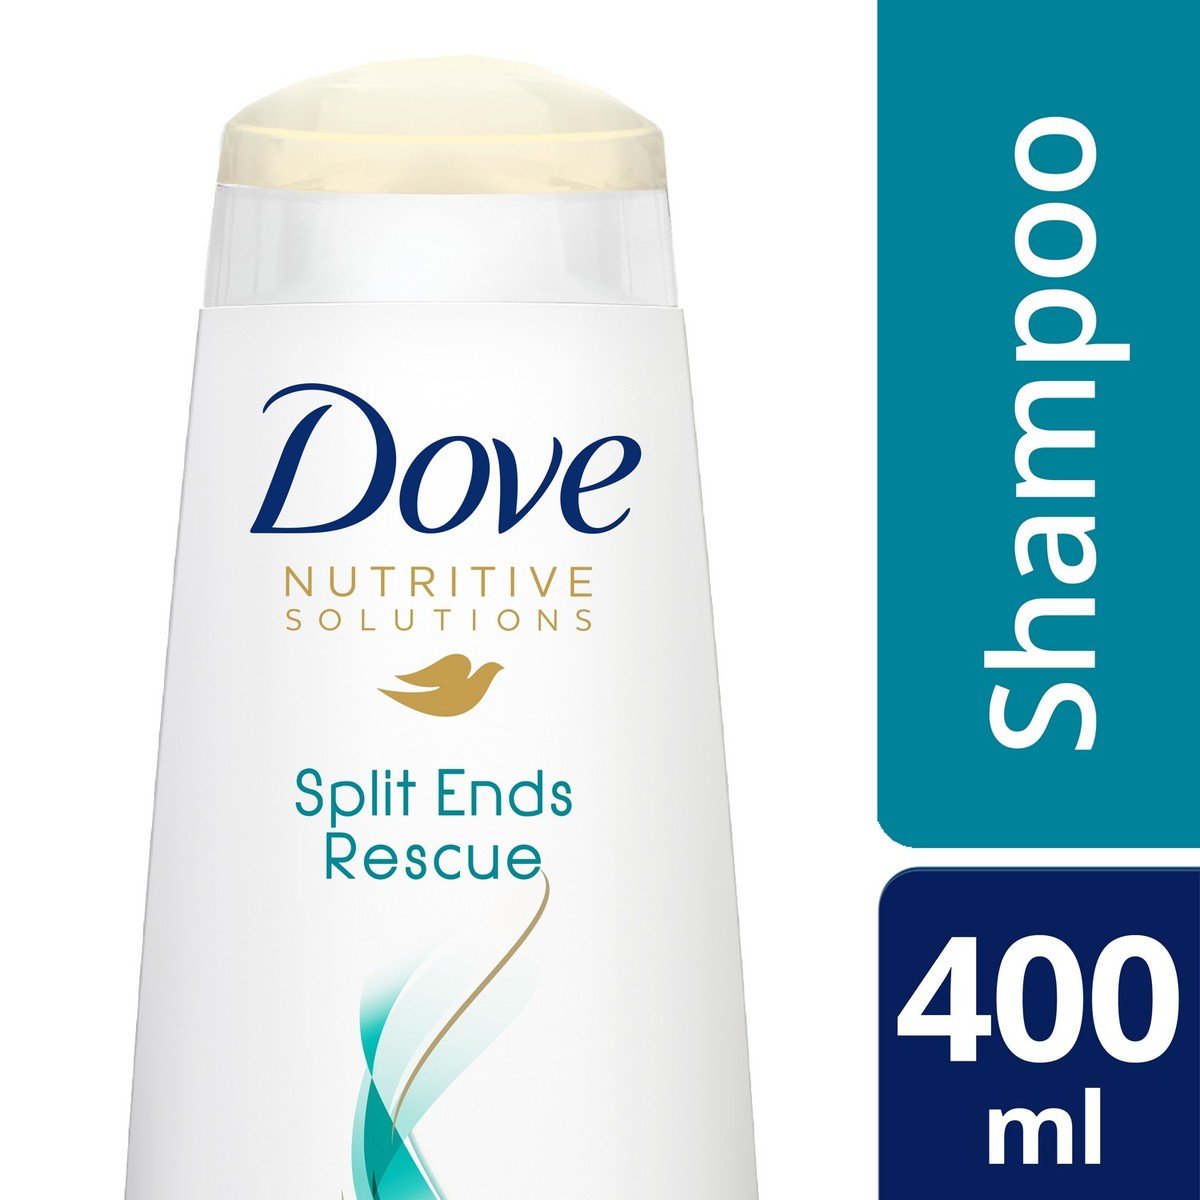 Dove Nutritive Solutions Spilt Ends Rescue Shampoo 400ml